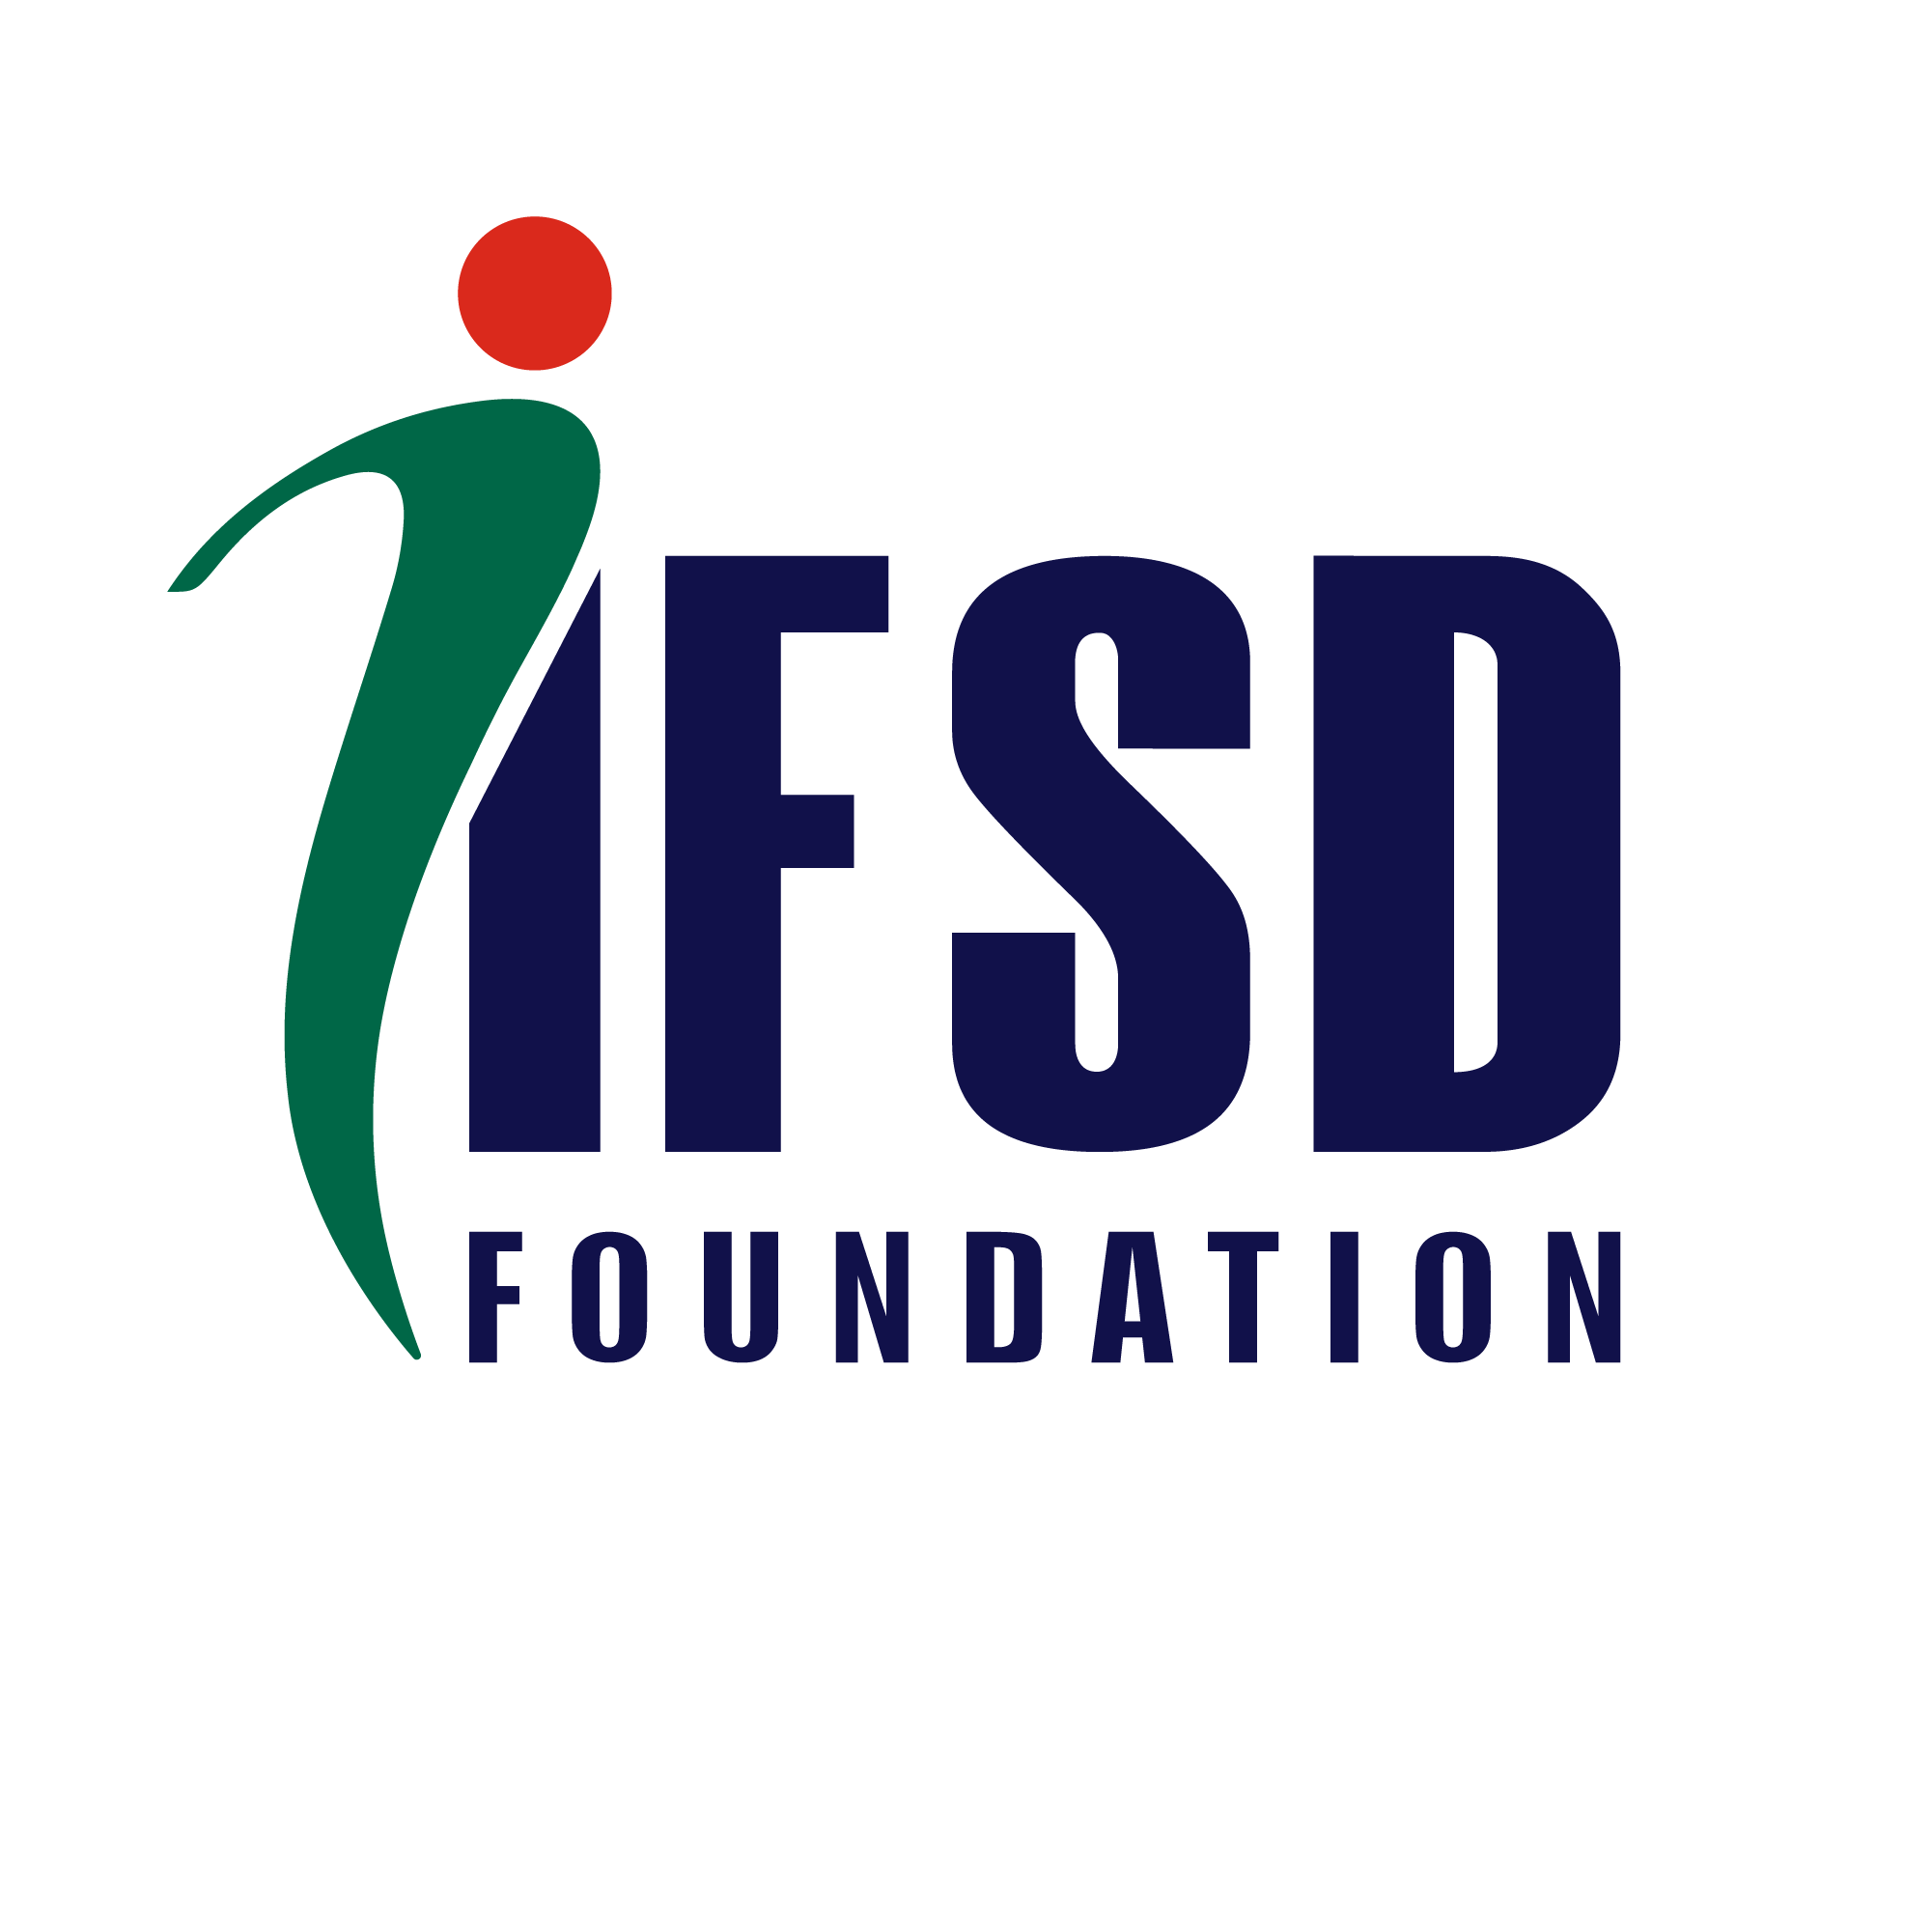 IFSD Foundation